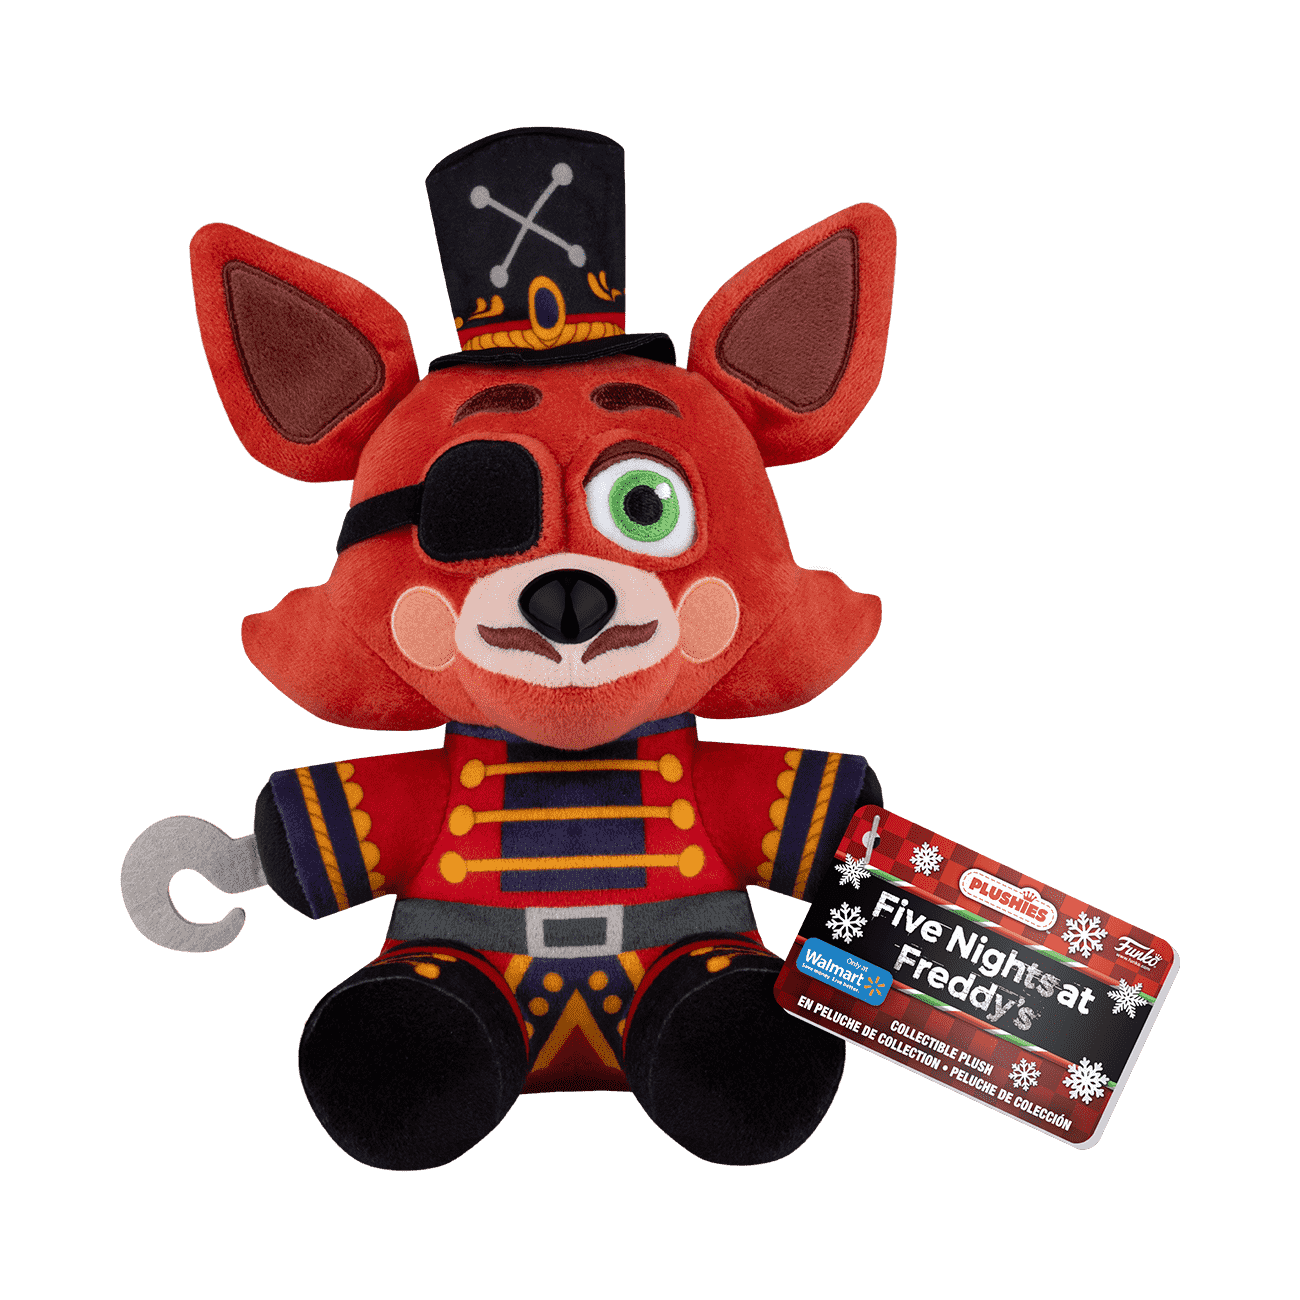 Buy Nutcracker Foxy Action Figure at Funko.